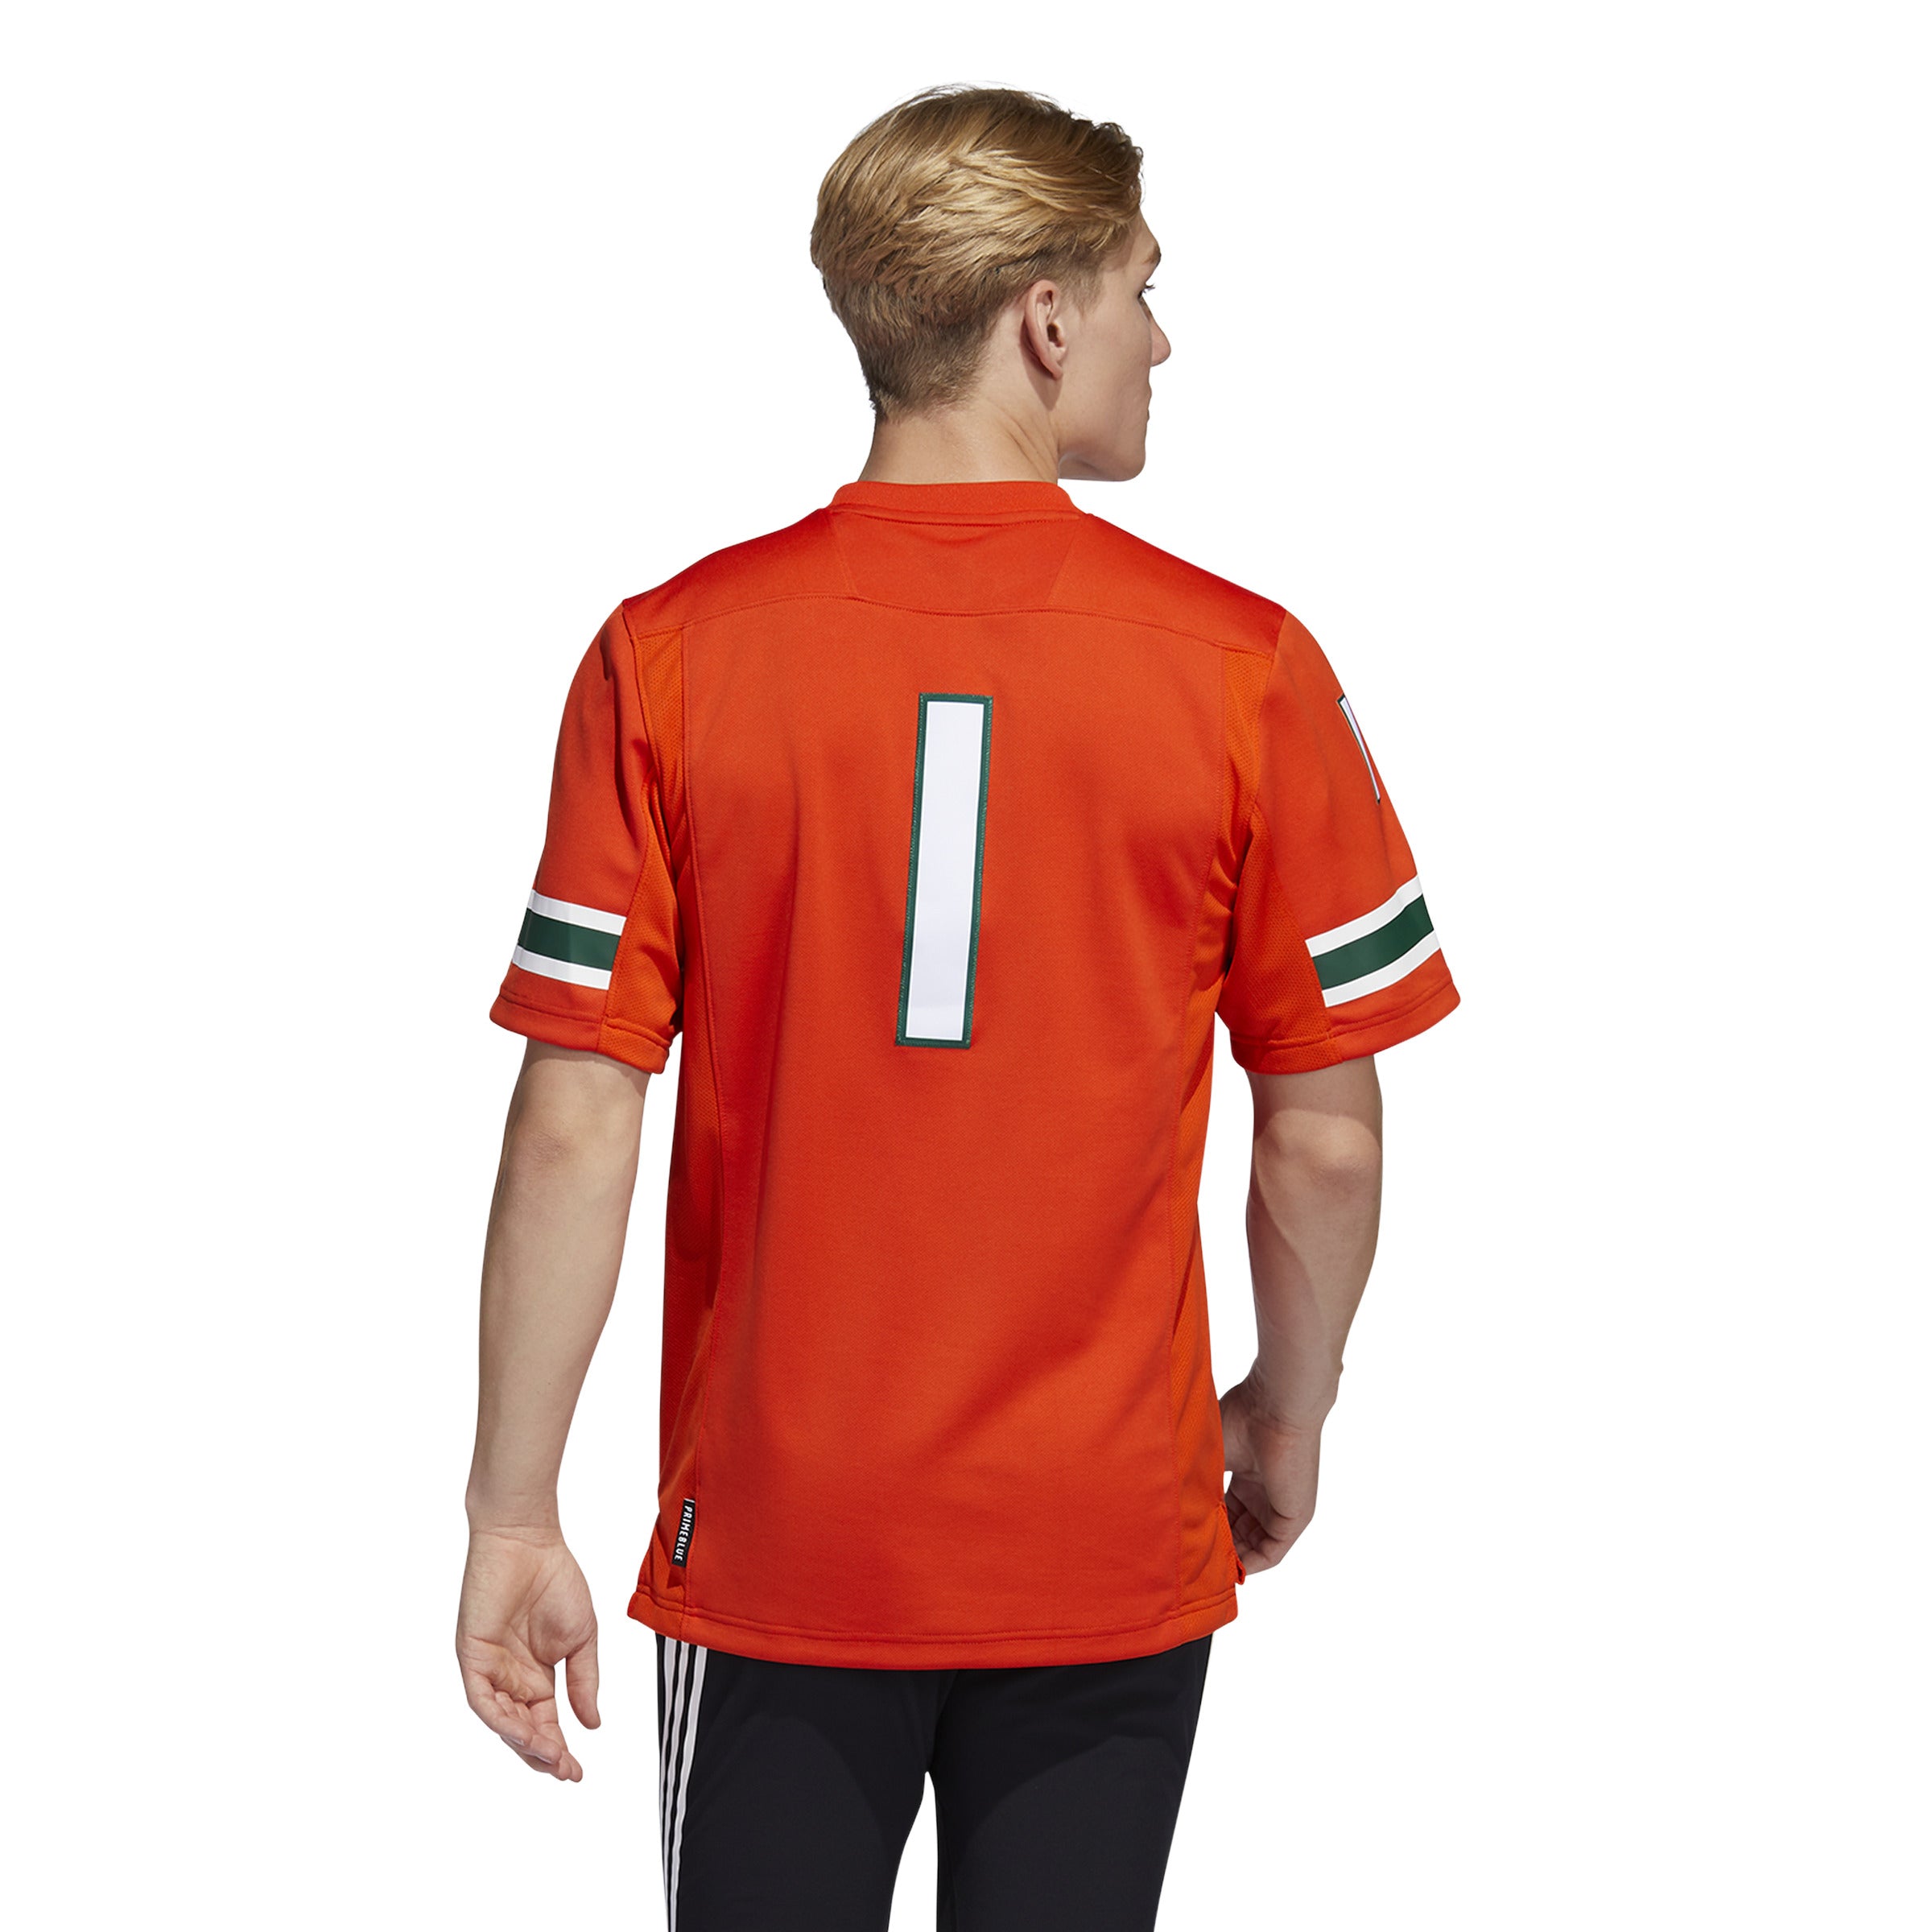 Miami Hurricanes adidas Premier Football Jersey #1 - Orange